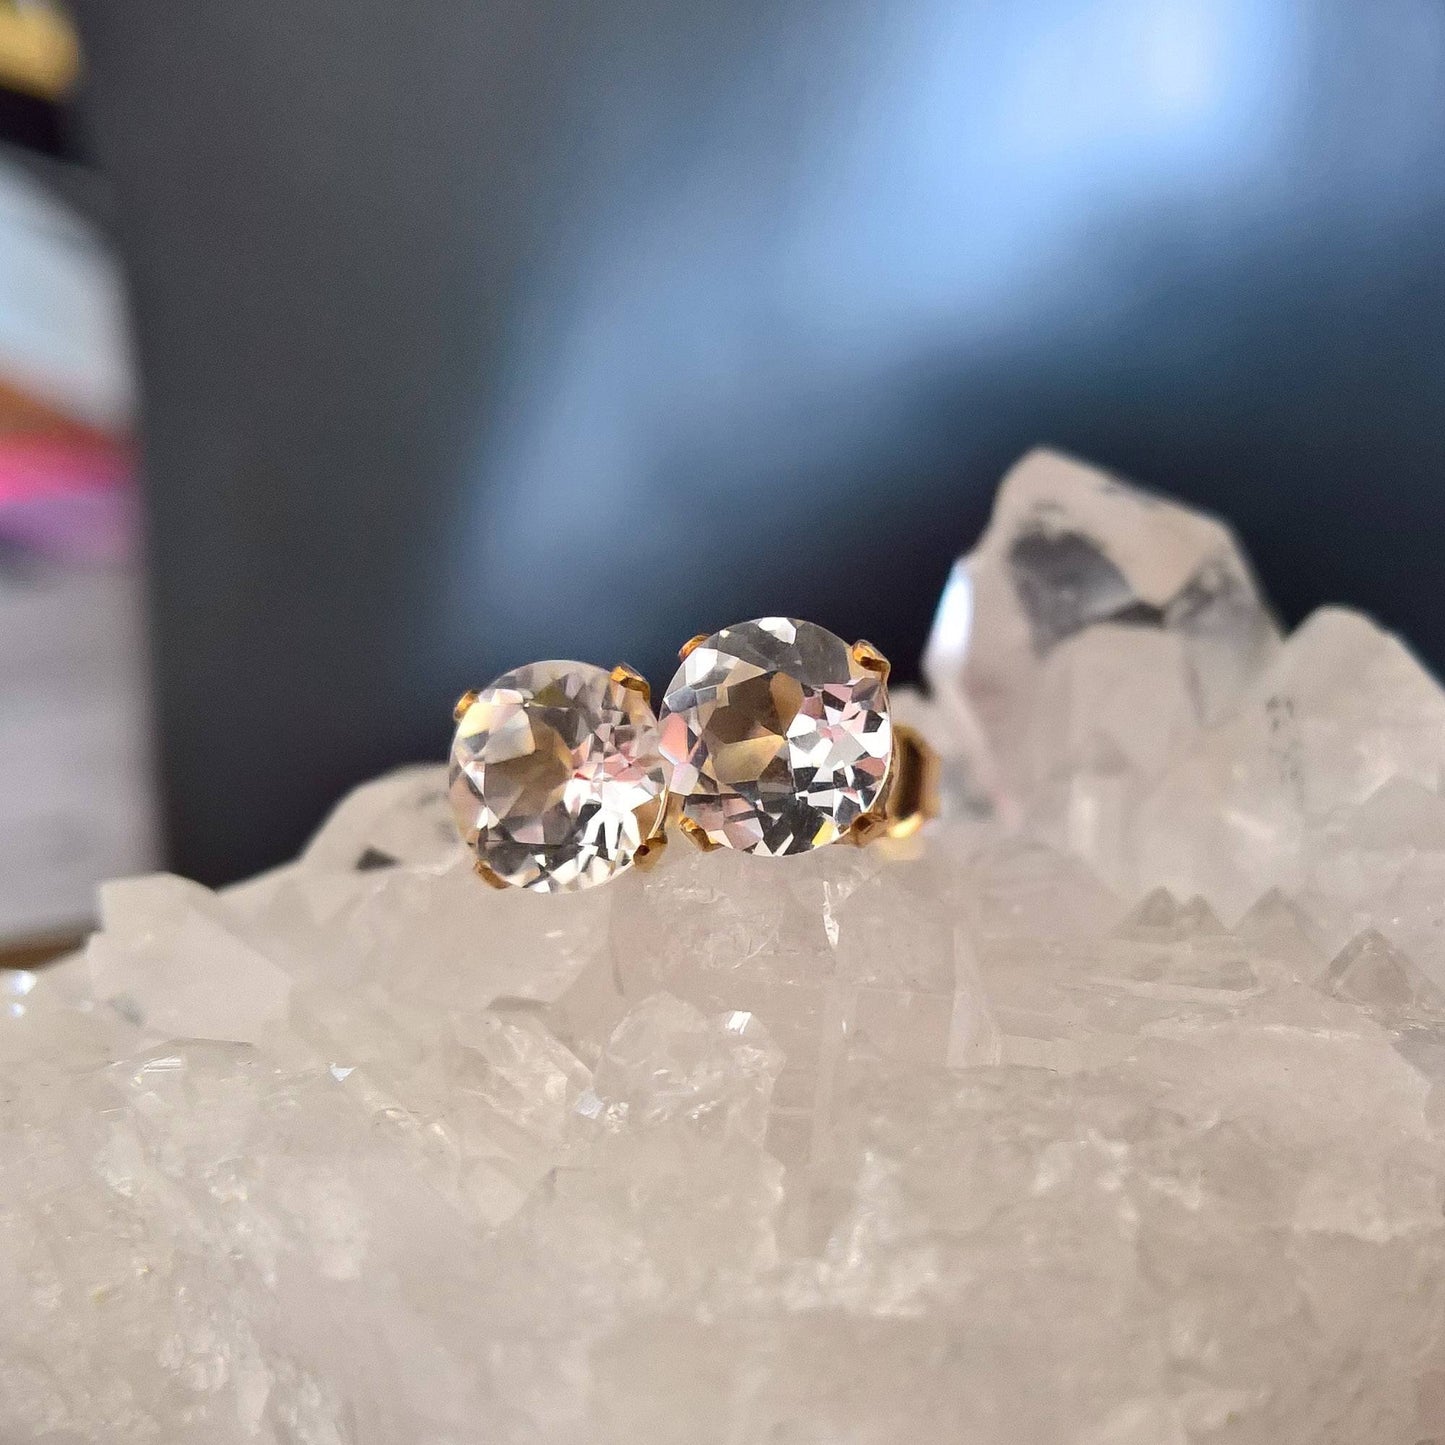 White topaz gemstone stud earrings in gold filled or sterling silver